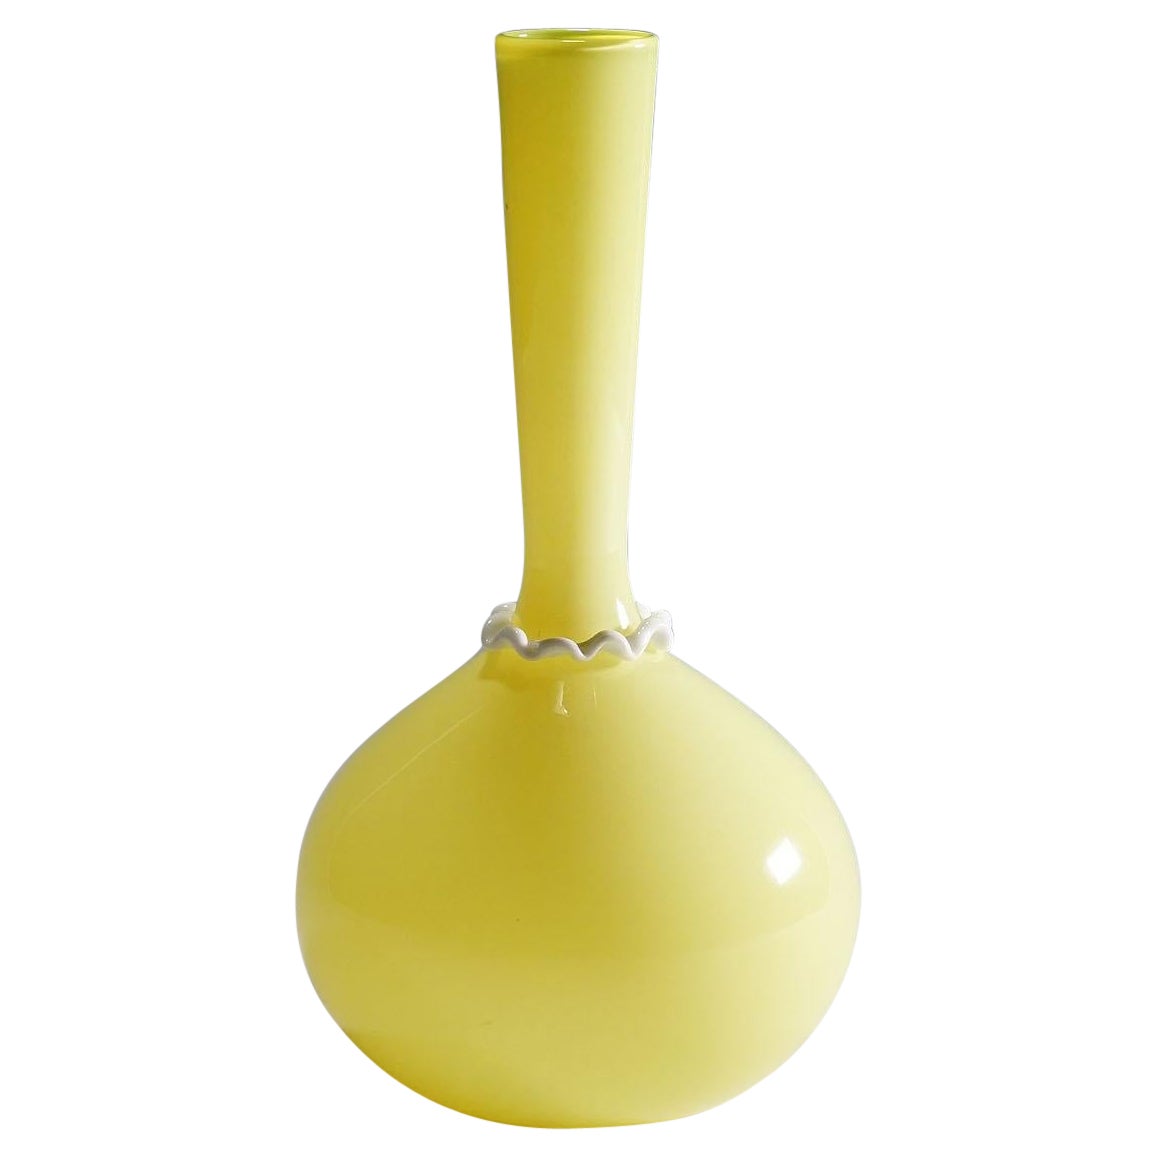 Vittorio Zecchin für Venini Soffiato, Vase aus gelbem und Lattimo-Glas, ca. 1950er Jahre